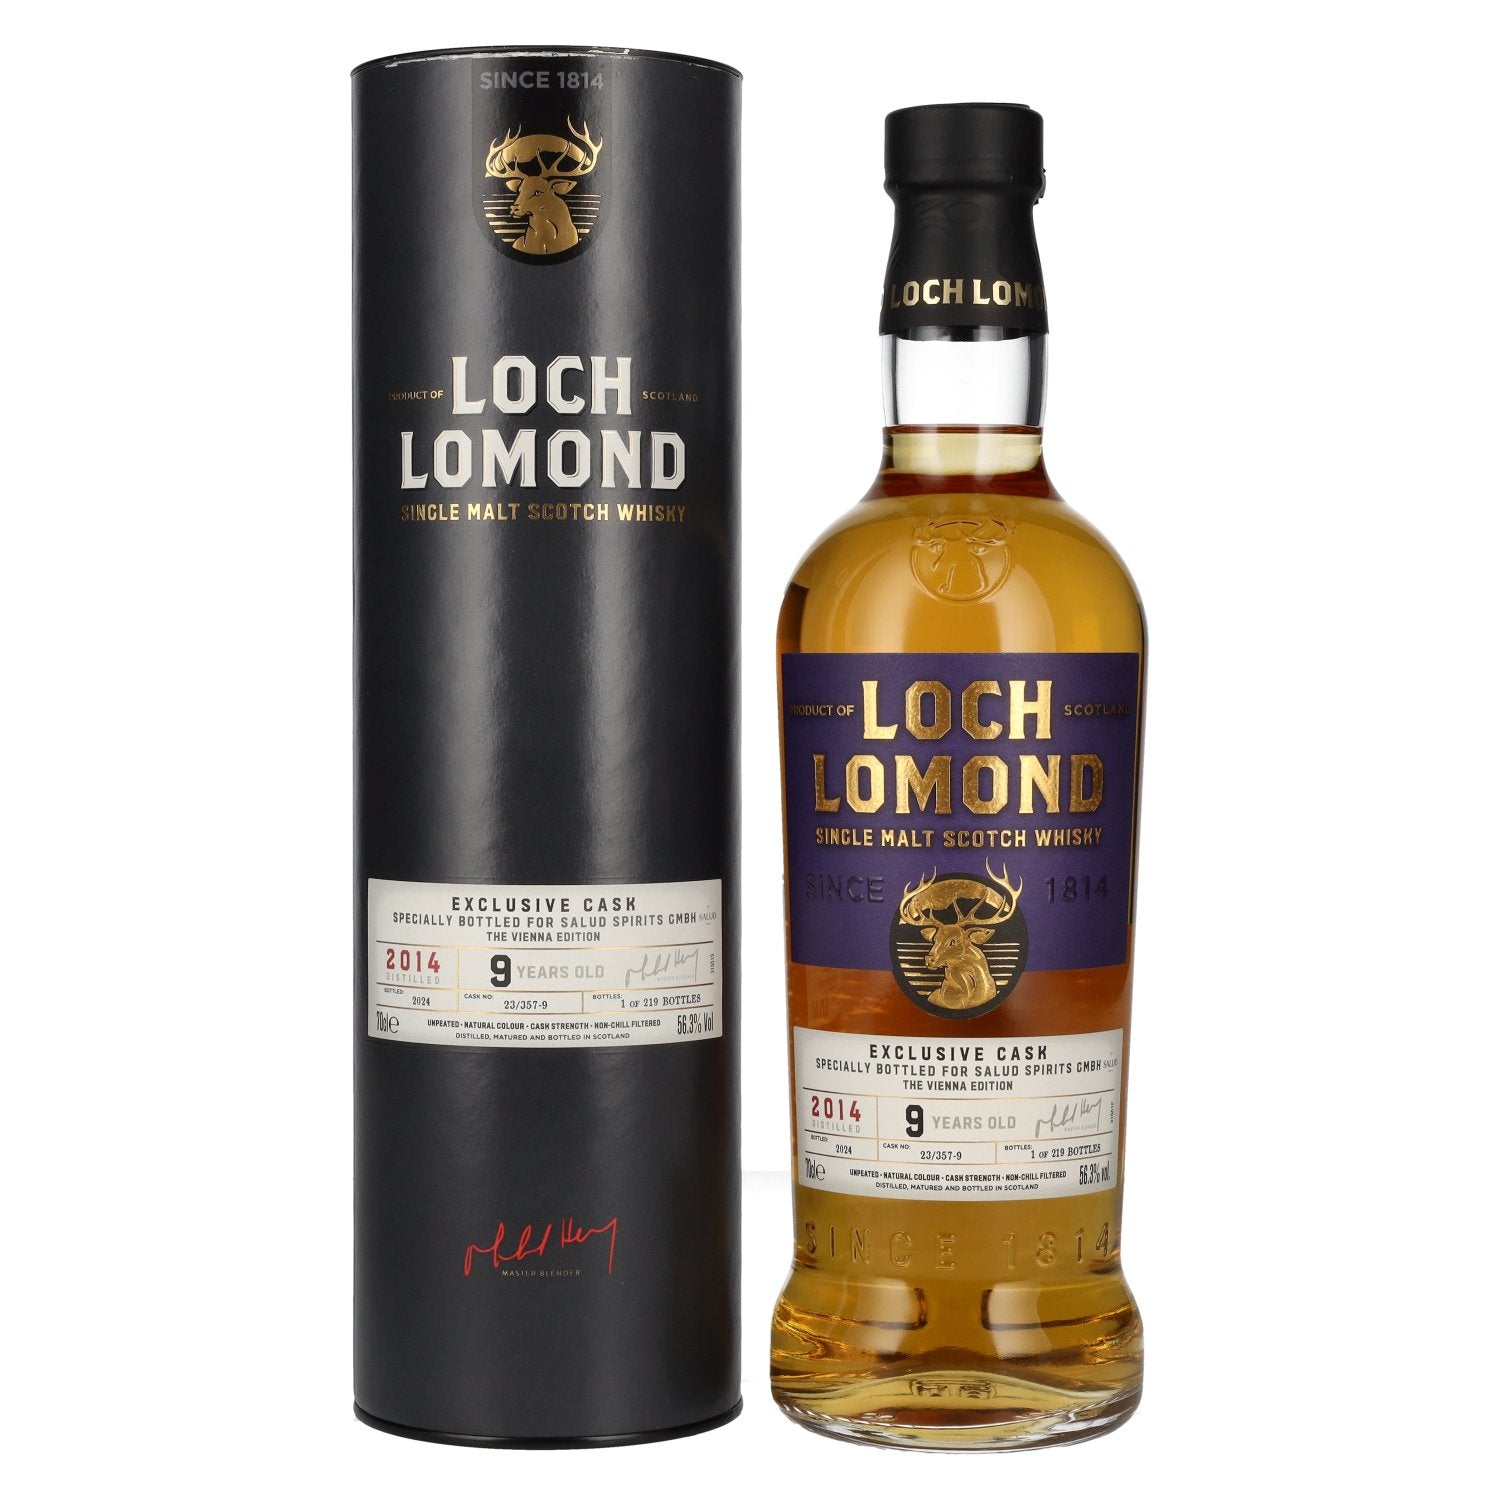 Loch Lomond 9 Years Old VIENNA EDITION Exclusiv Cask Single Malt Scotch Whisky 56,3% Vol. 0,7l in Giftbox